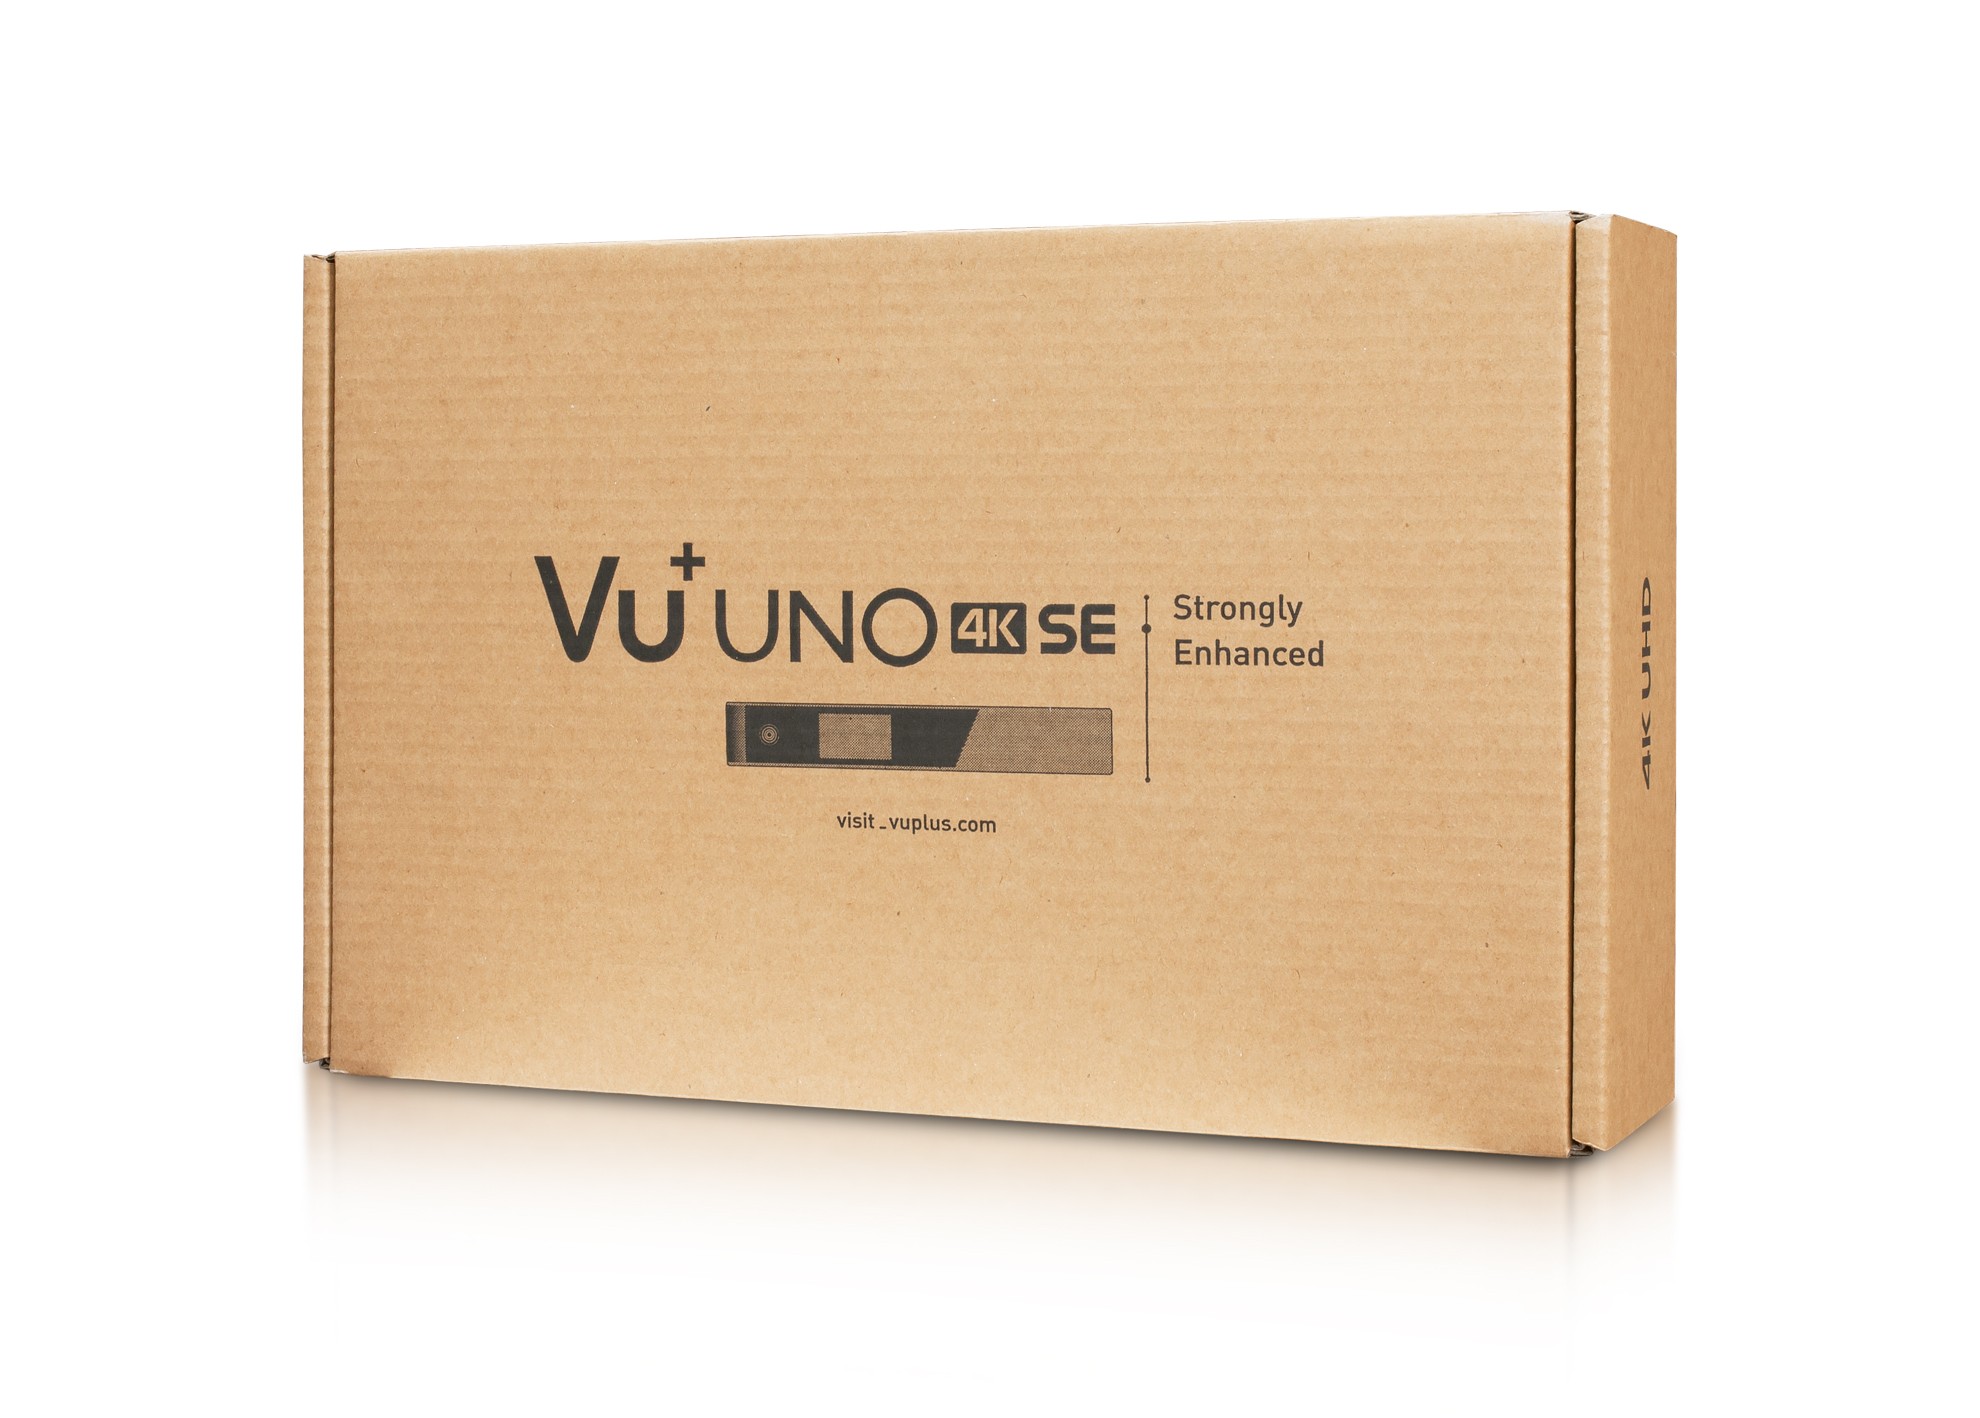 VU+ UNO 4K SE (1x MTSIF Dual DVB-T2) 